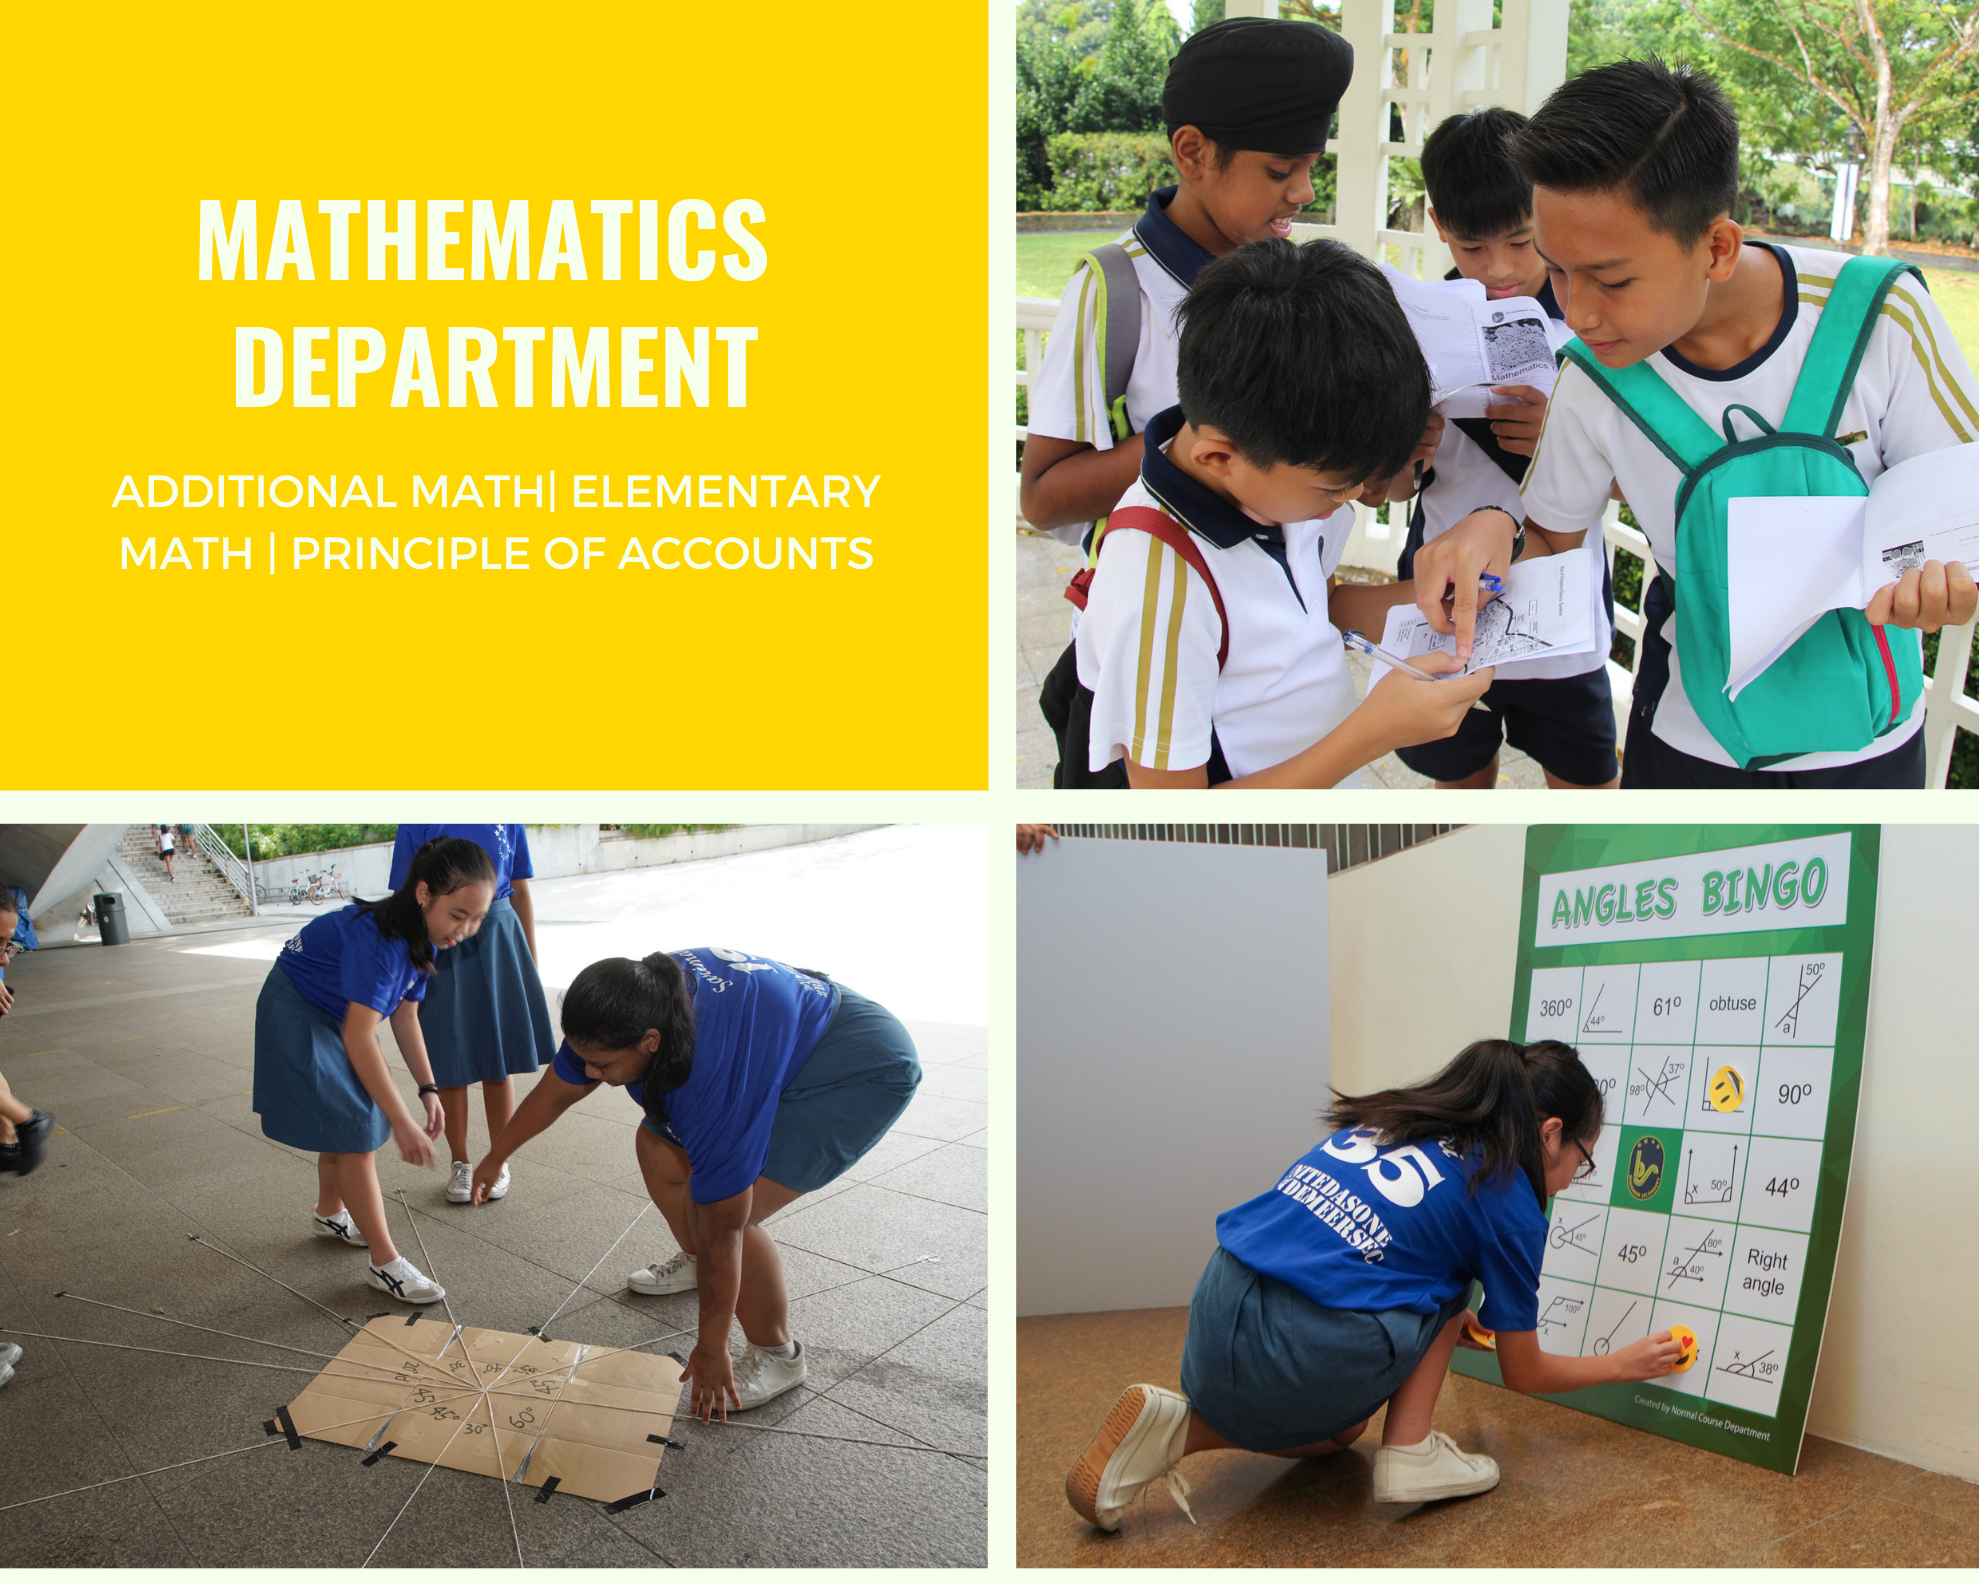 Mathematics Department Overview